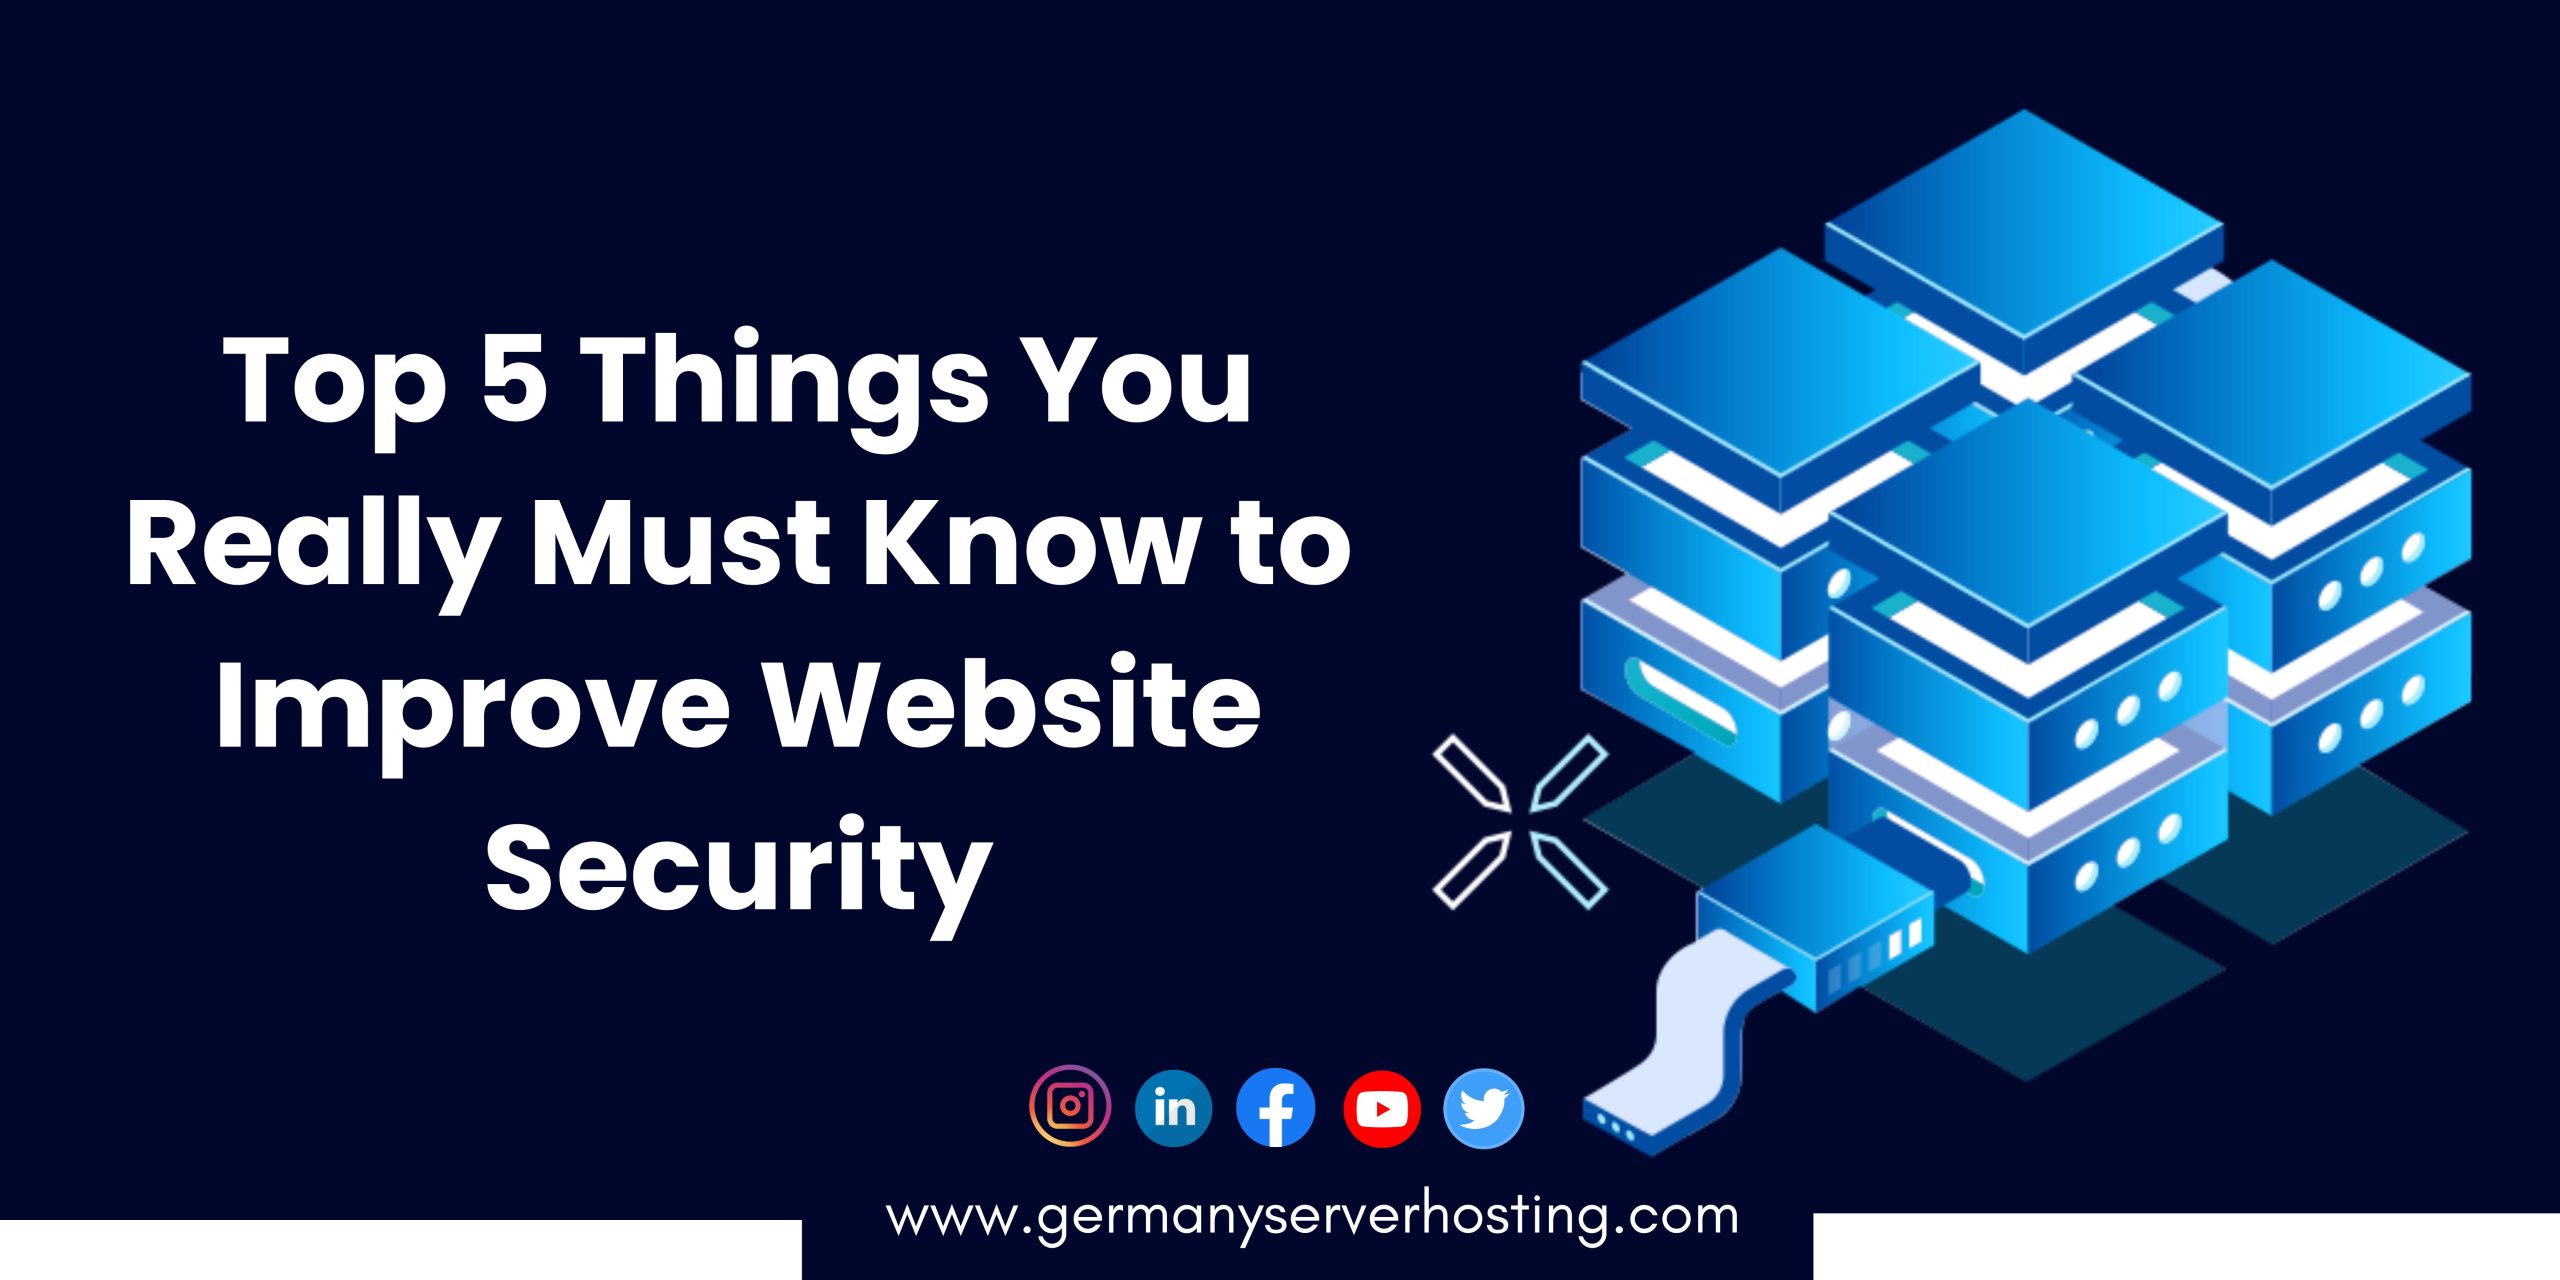 Improve your website security